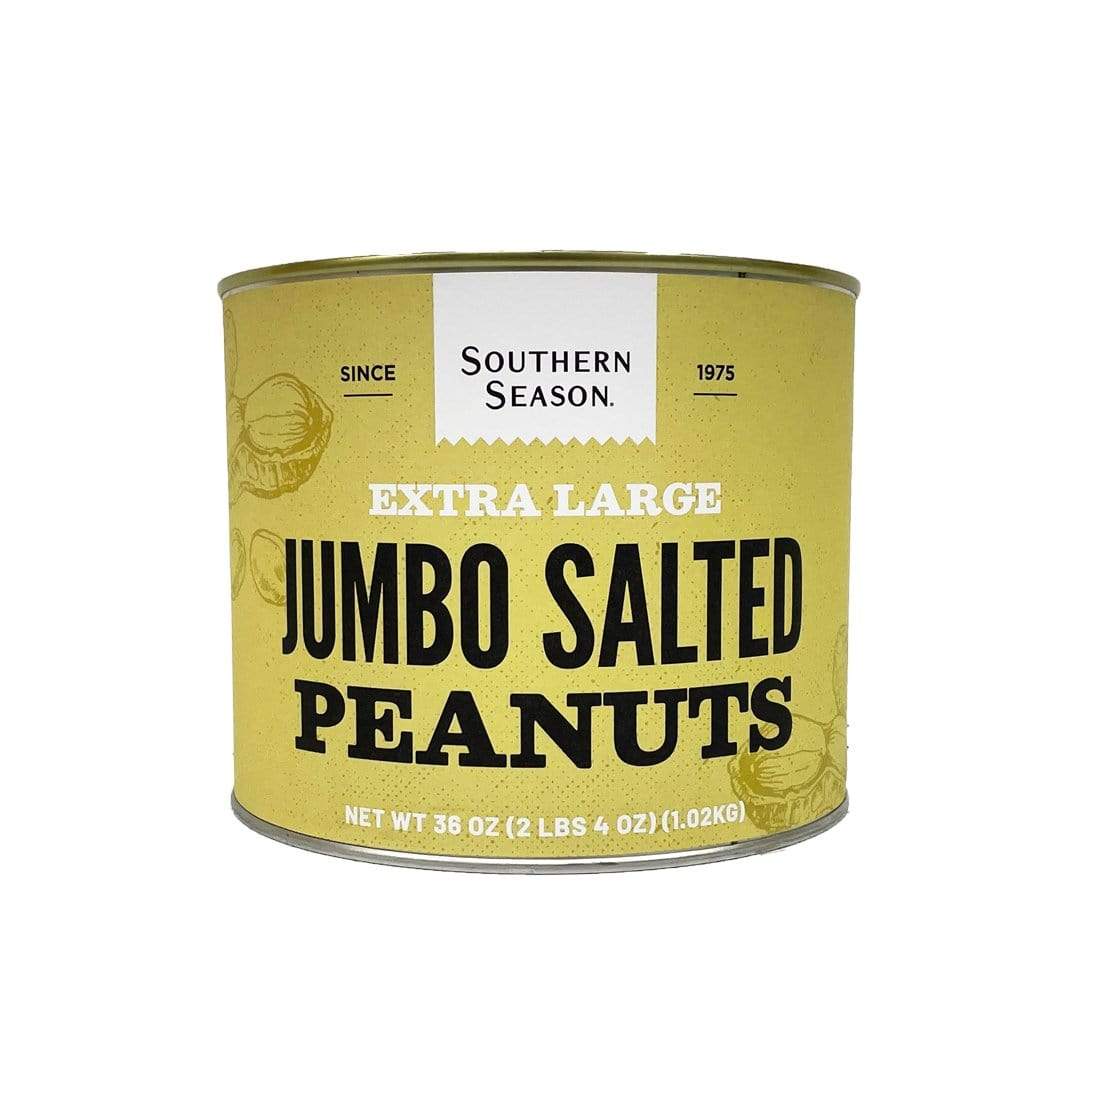 Southern Season Southern Season Jumbo Salted Peanuts 36 oz